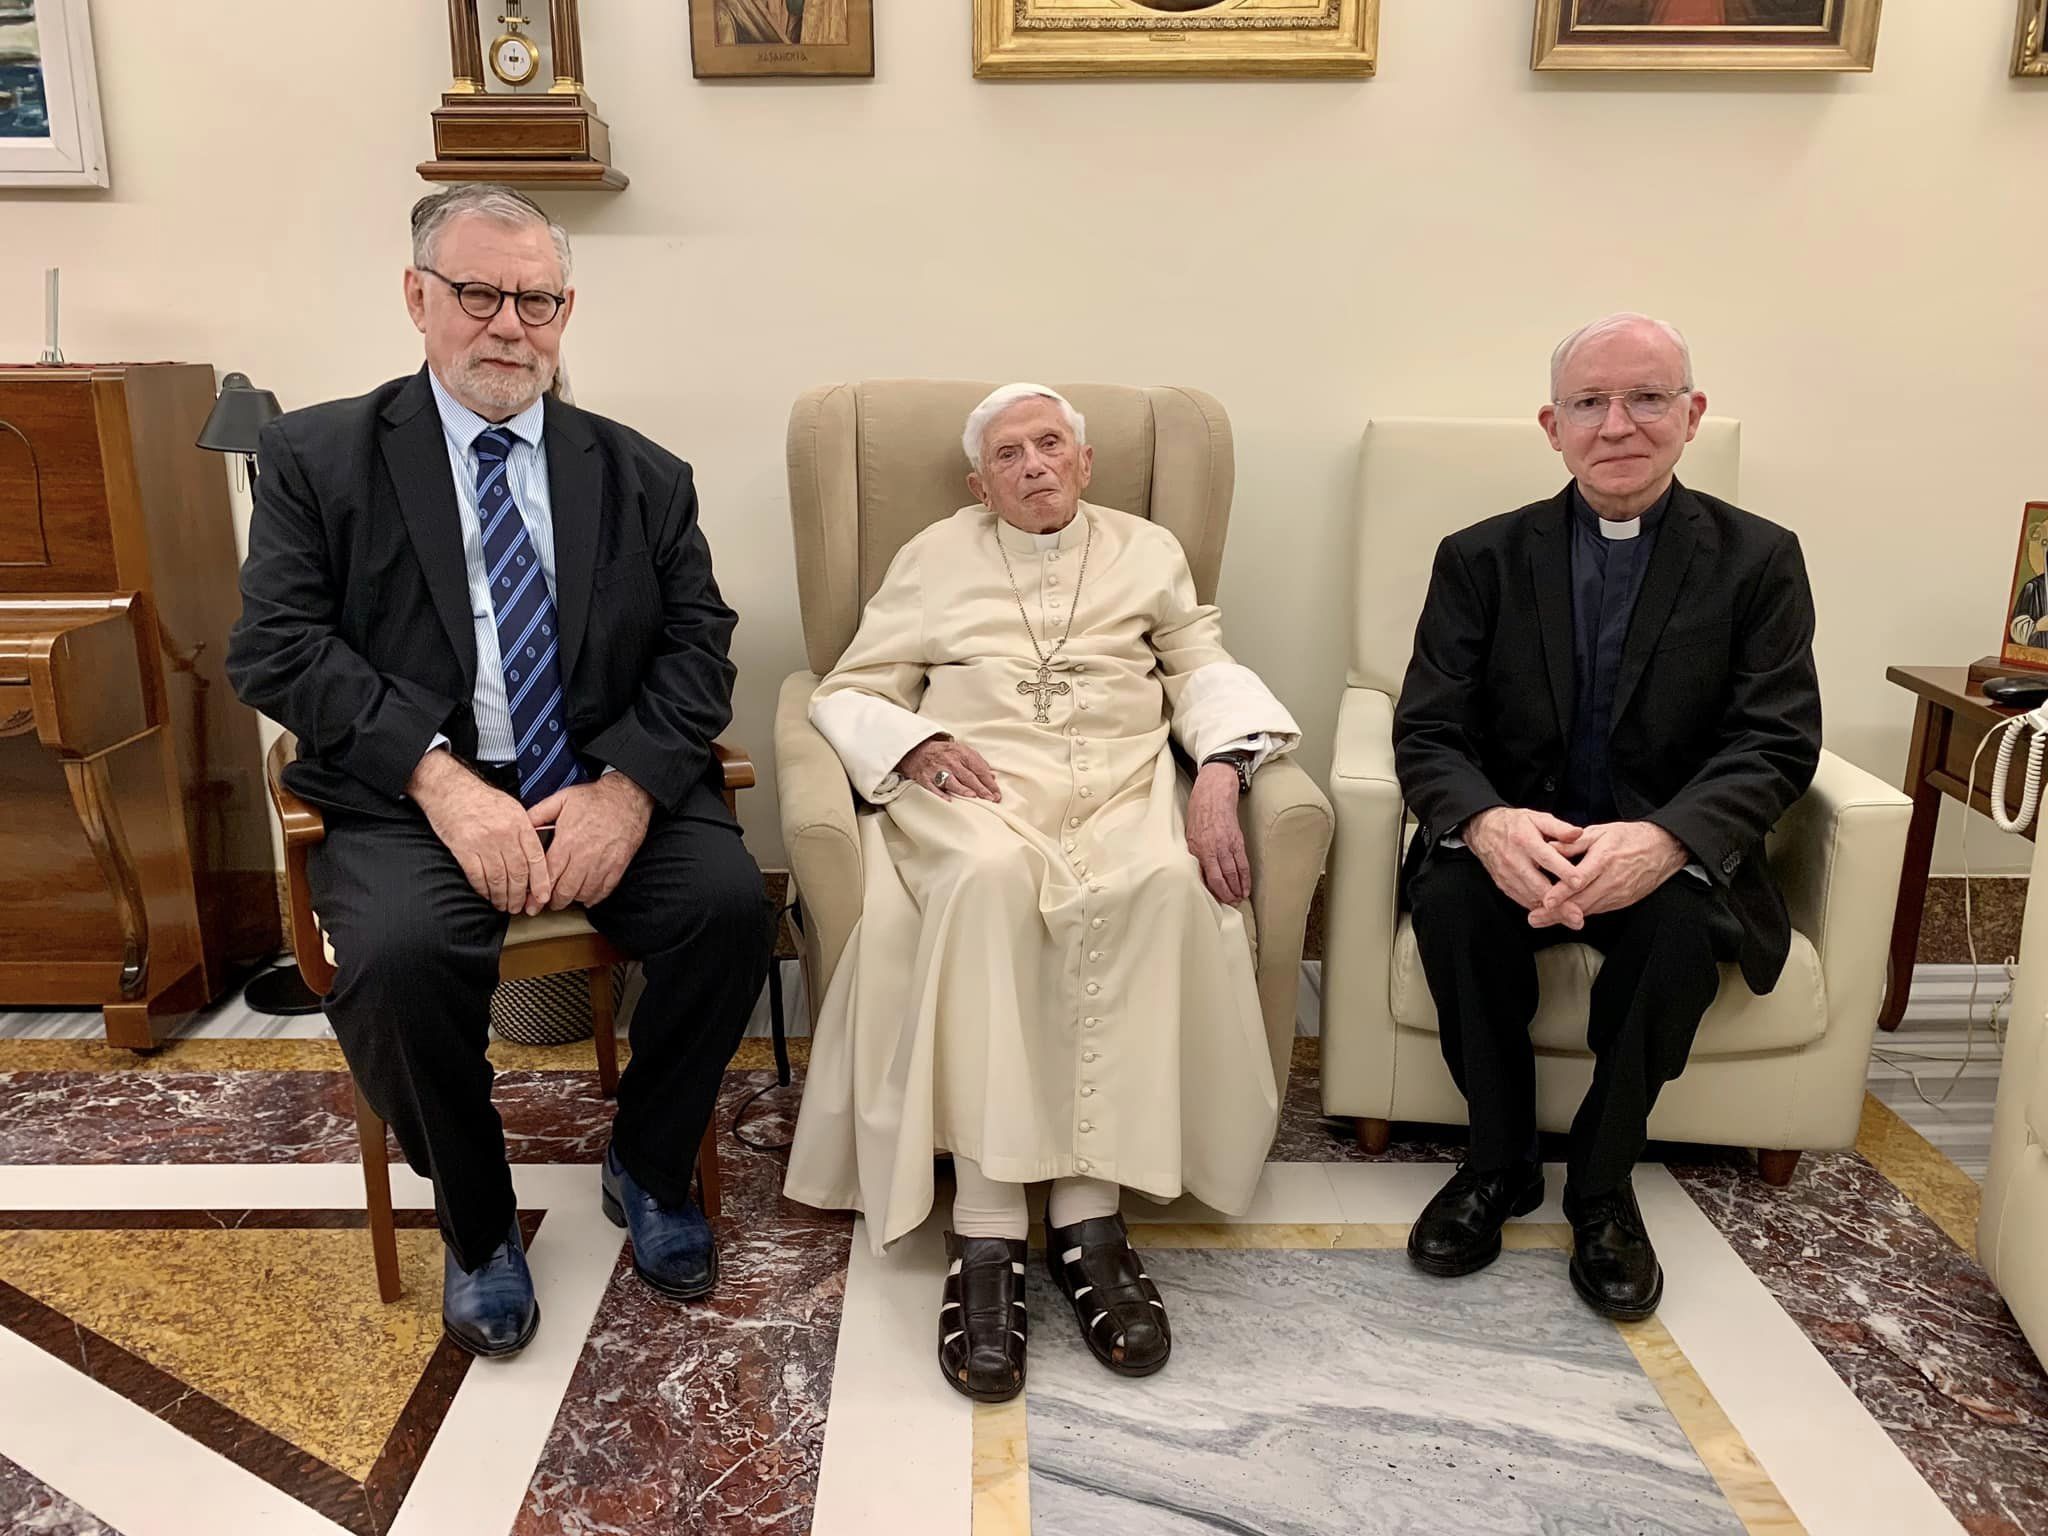 Fondazione Vaticana Joseph Ratzinger - Benedetto XVI - rencontre du pere Michel Fedou jesuite avec Benoît XVI